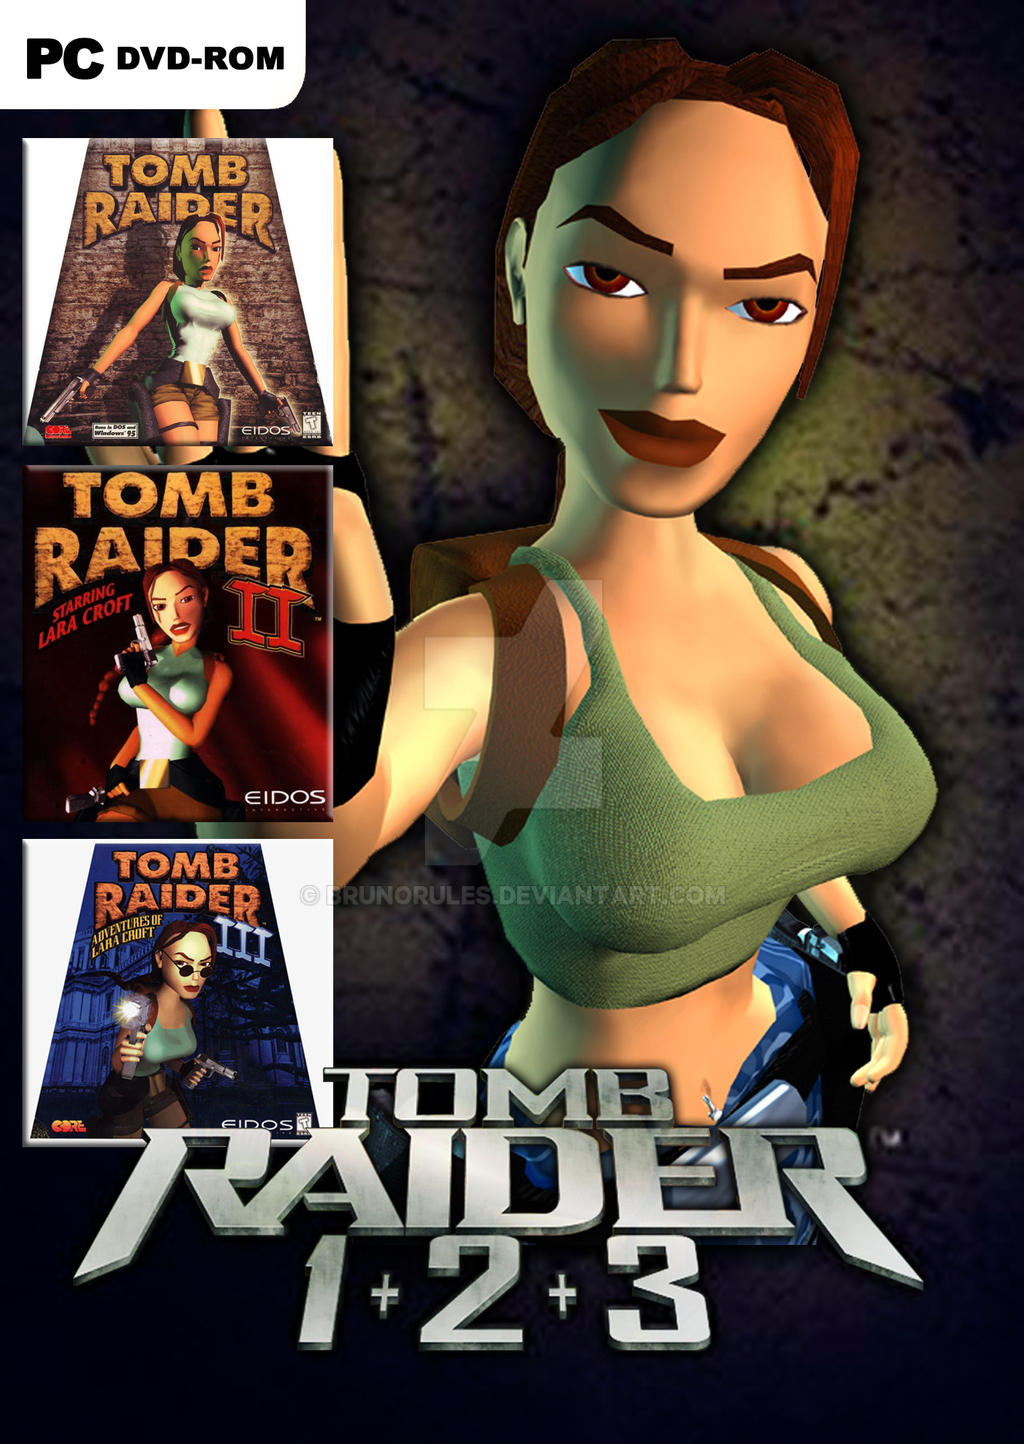 Tomb Raider 1 + 2 + 3 by brunoRules on DeviantArt